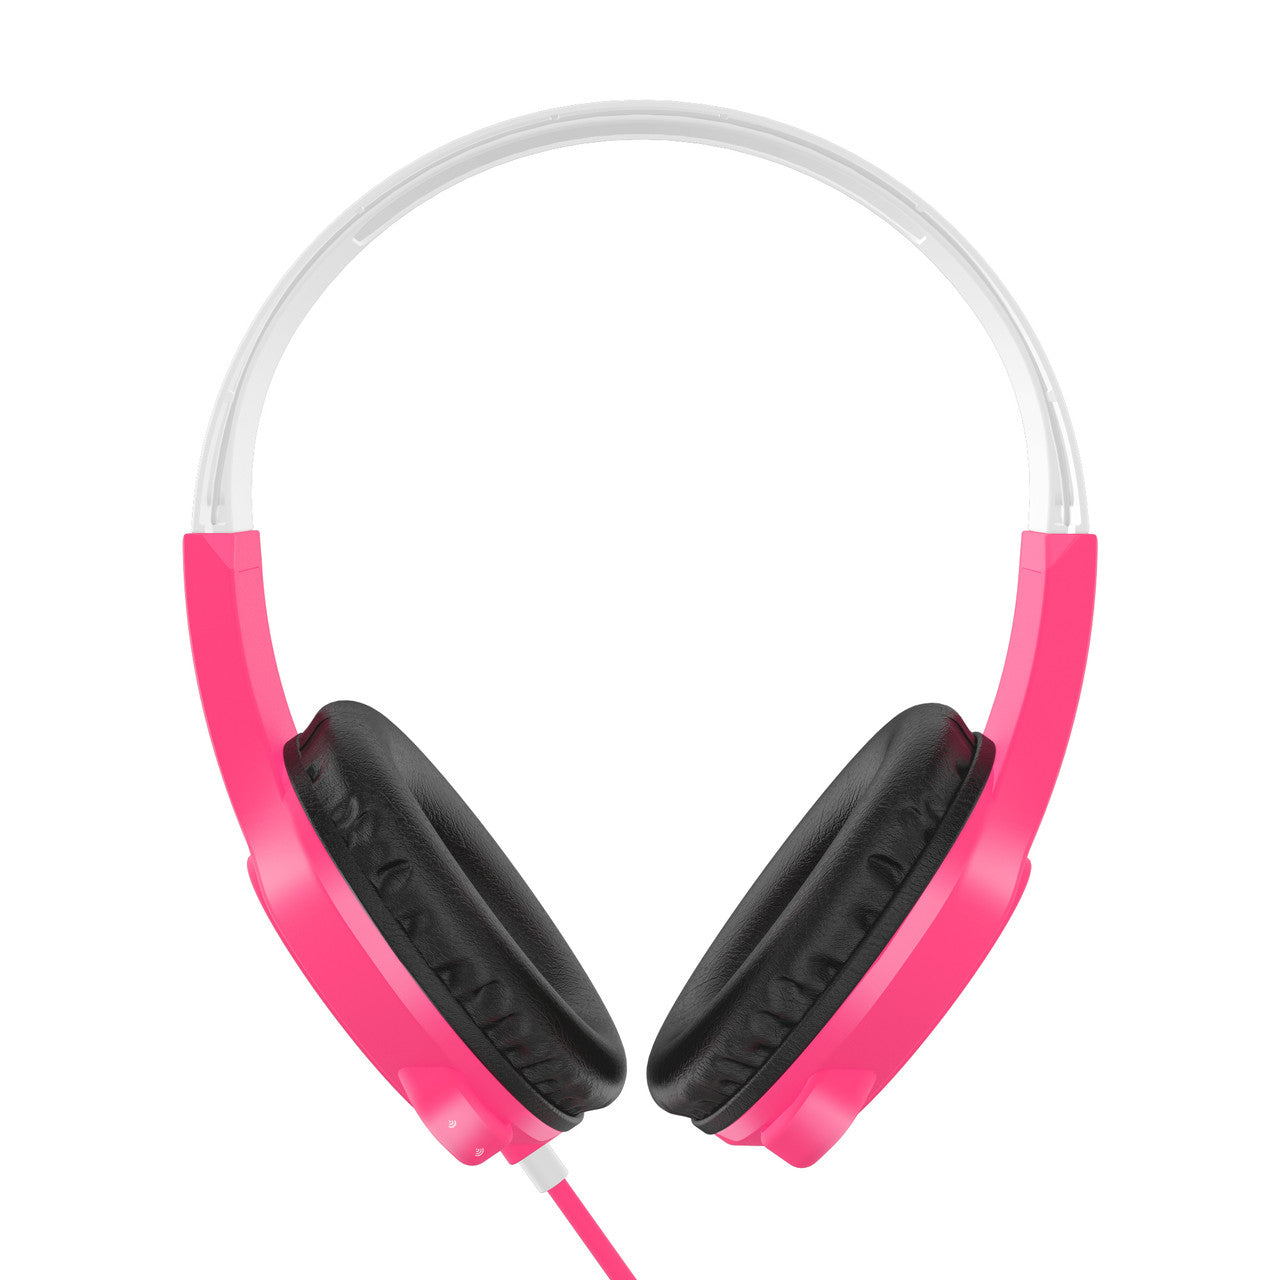 Image of KidJamz KJ35 Safe Listening Headphones for Kids (No Microphone).